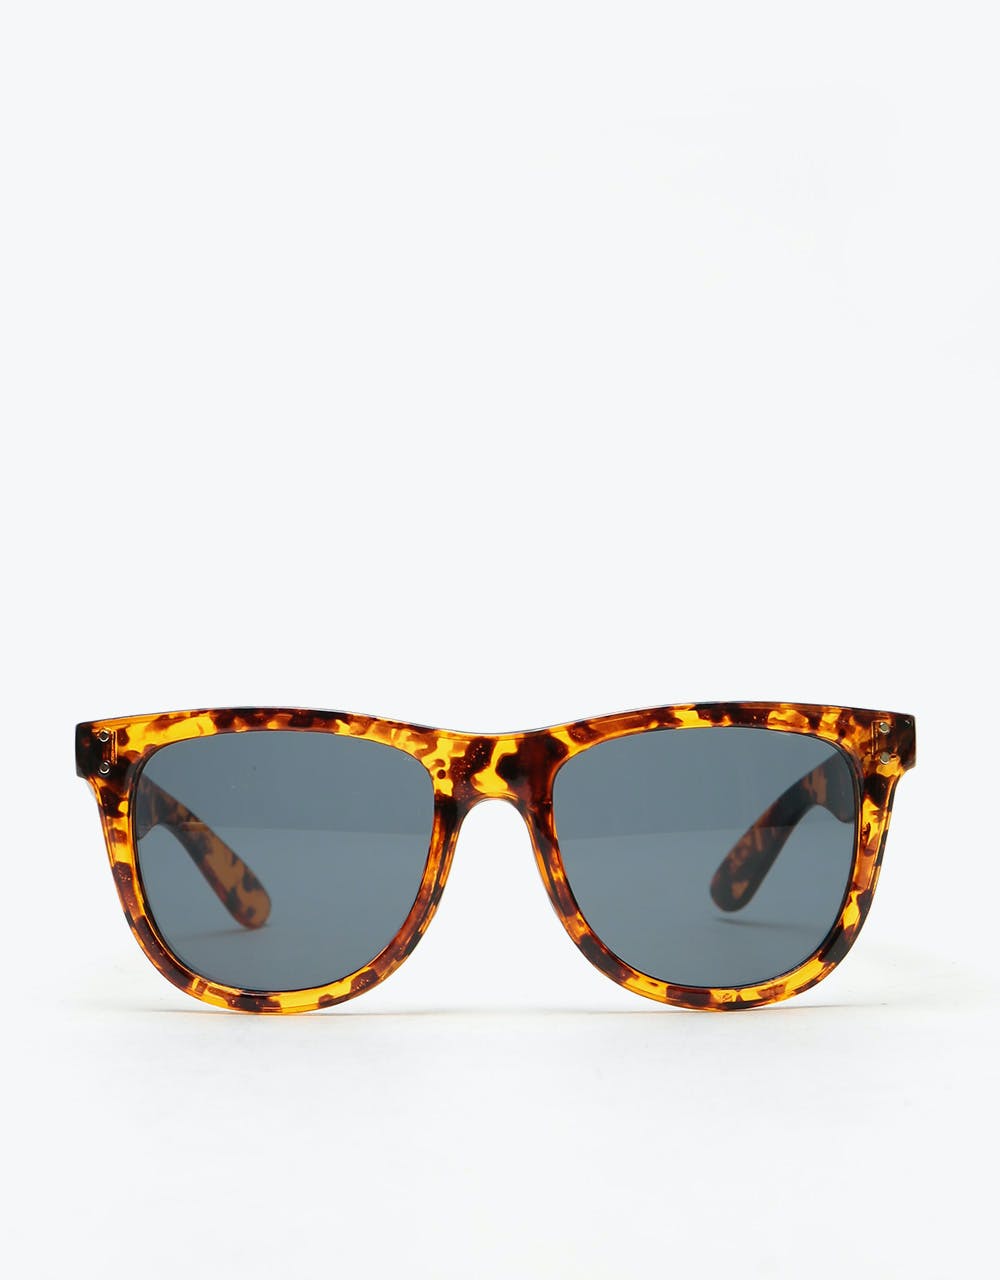 Independent Manner Sunglasses - Tortoise Shell